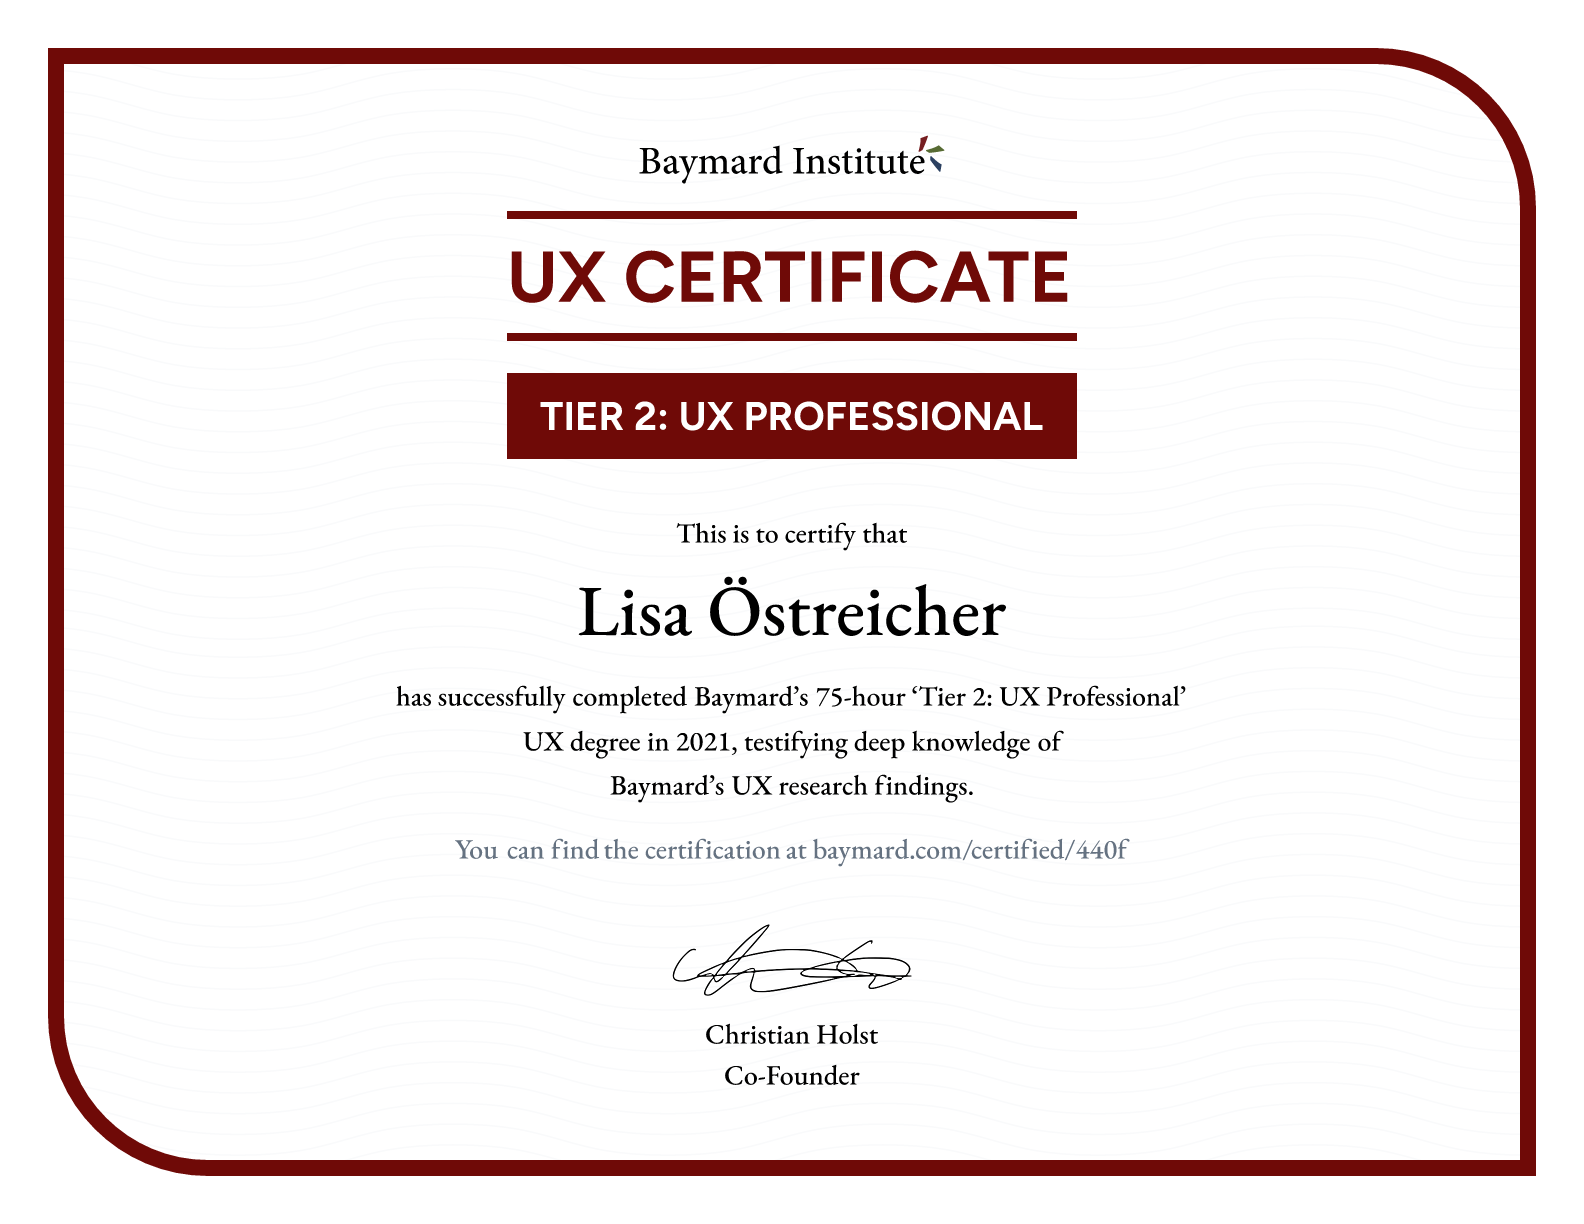 Lisa Östreicher’s certificate